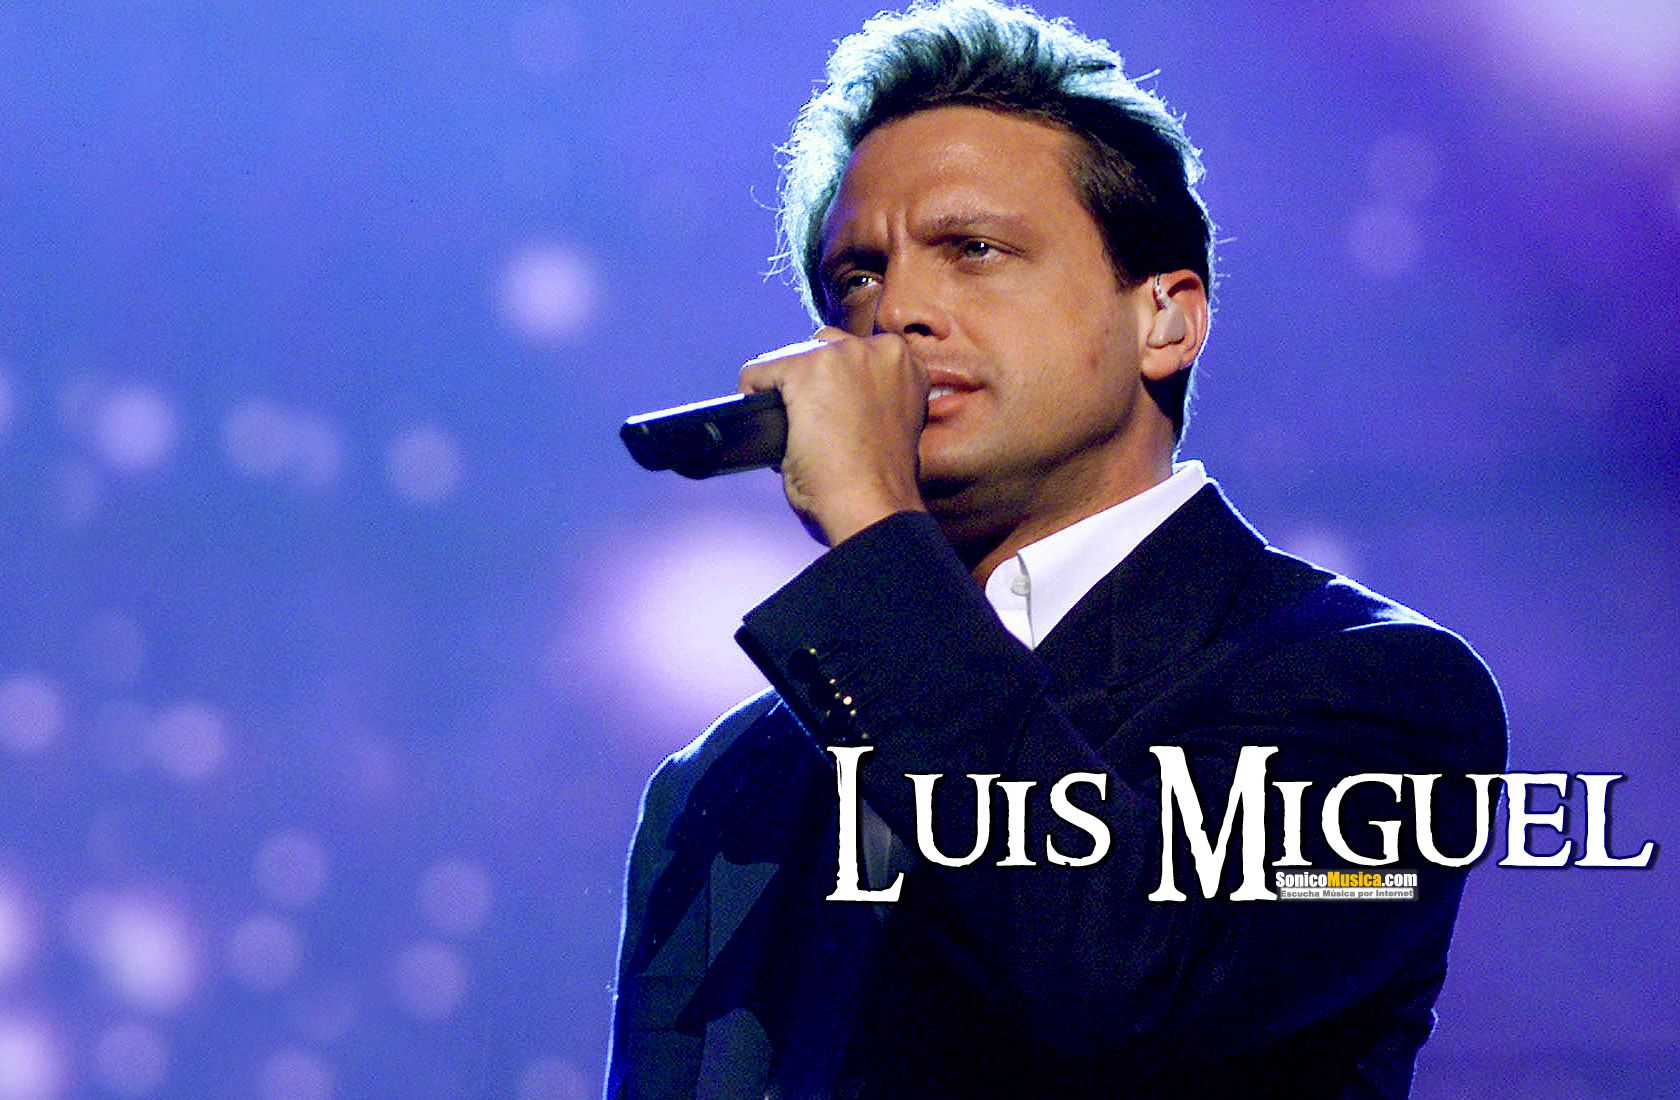 Luis Miguel Background